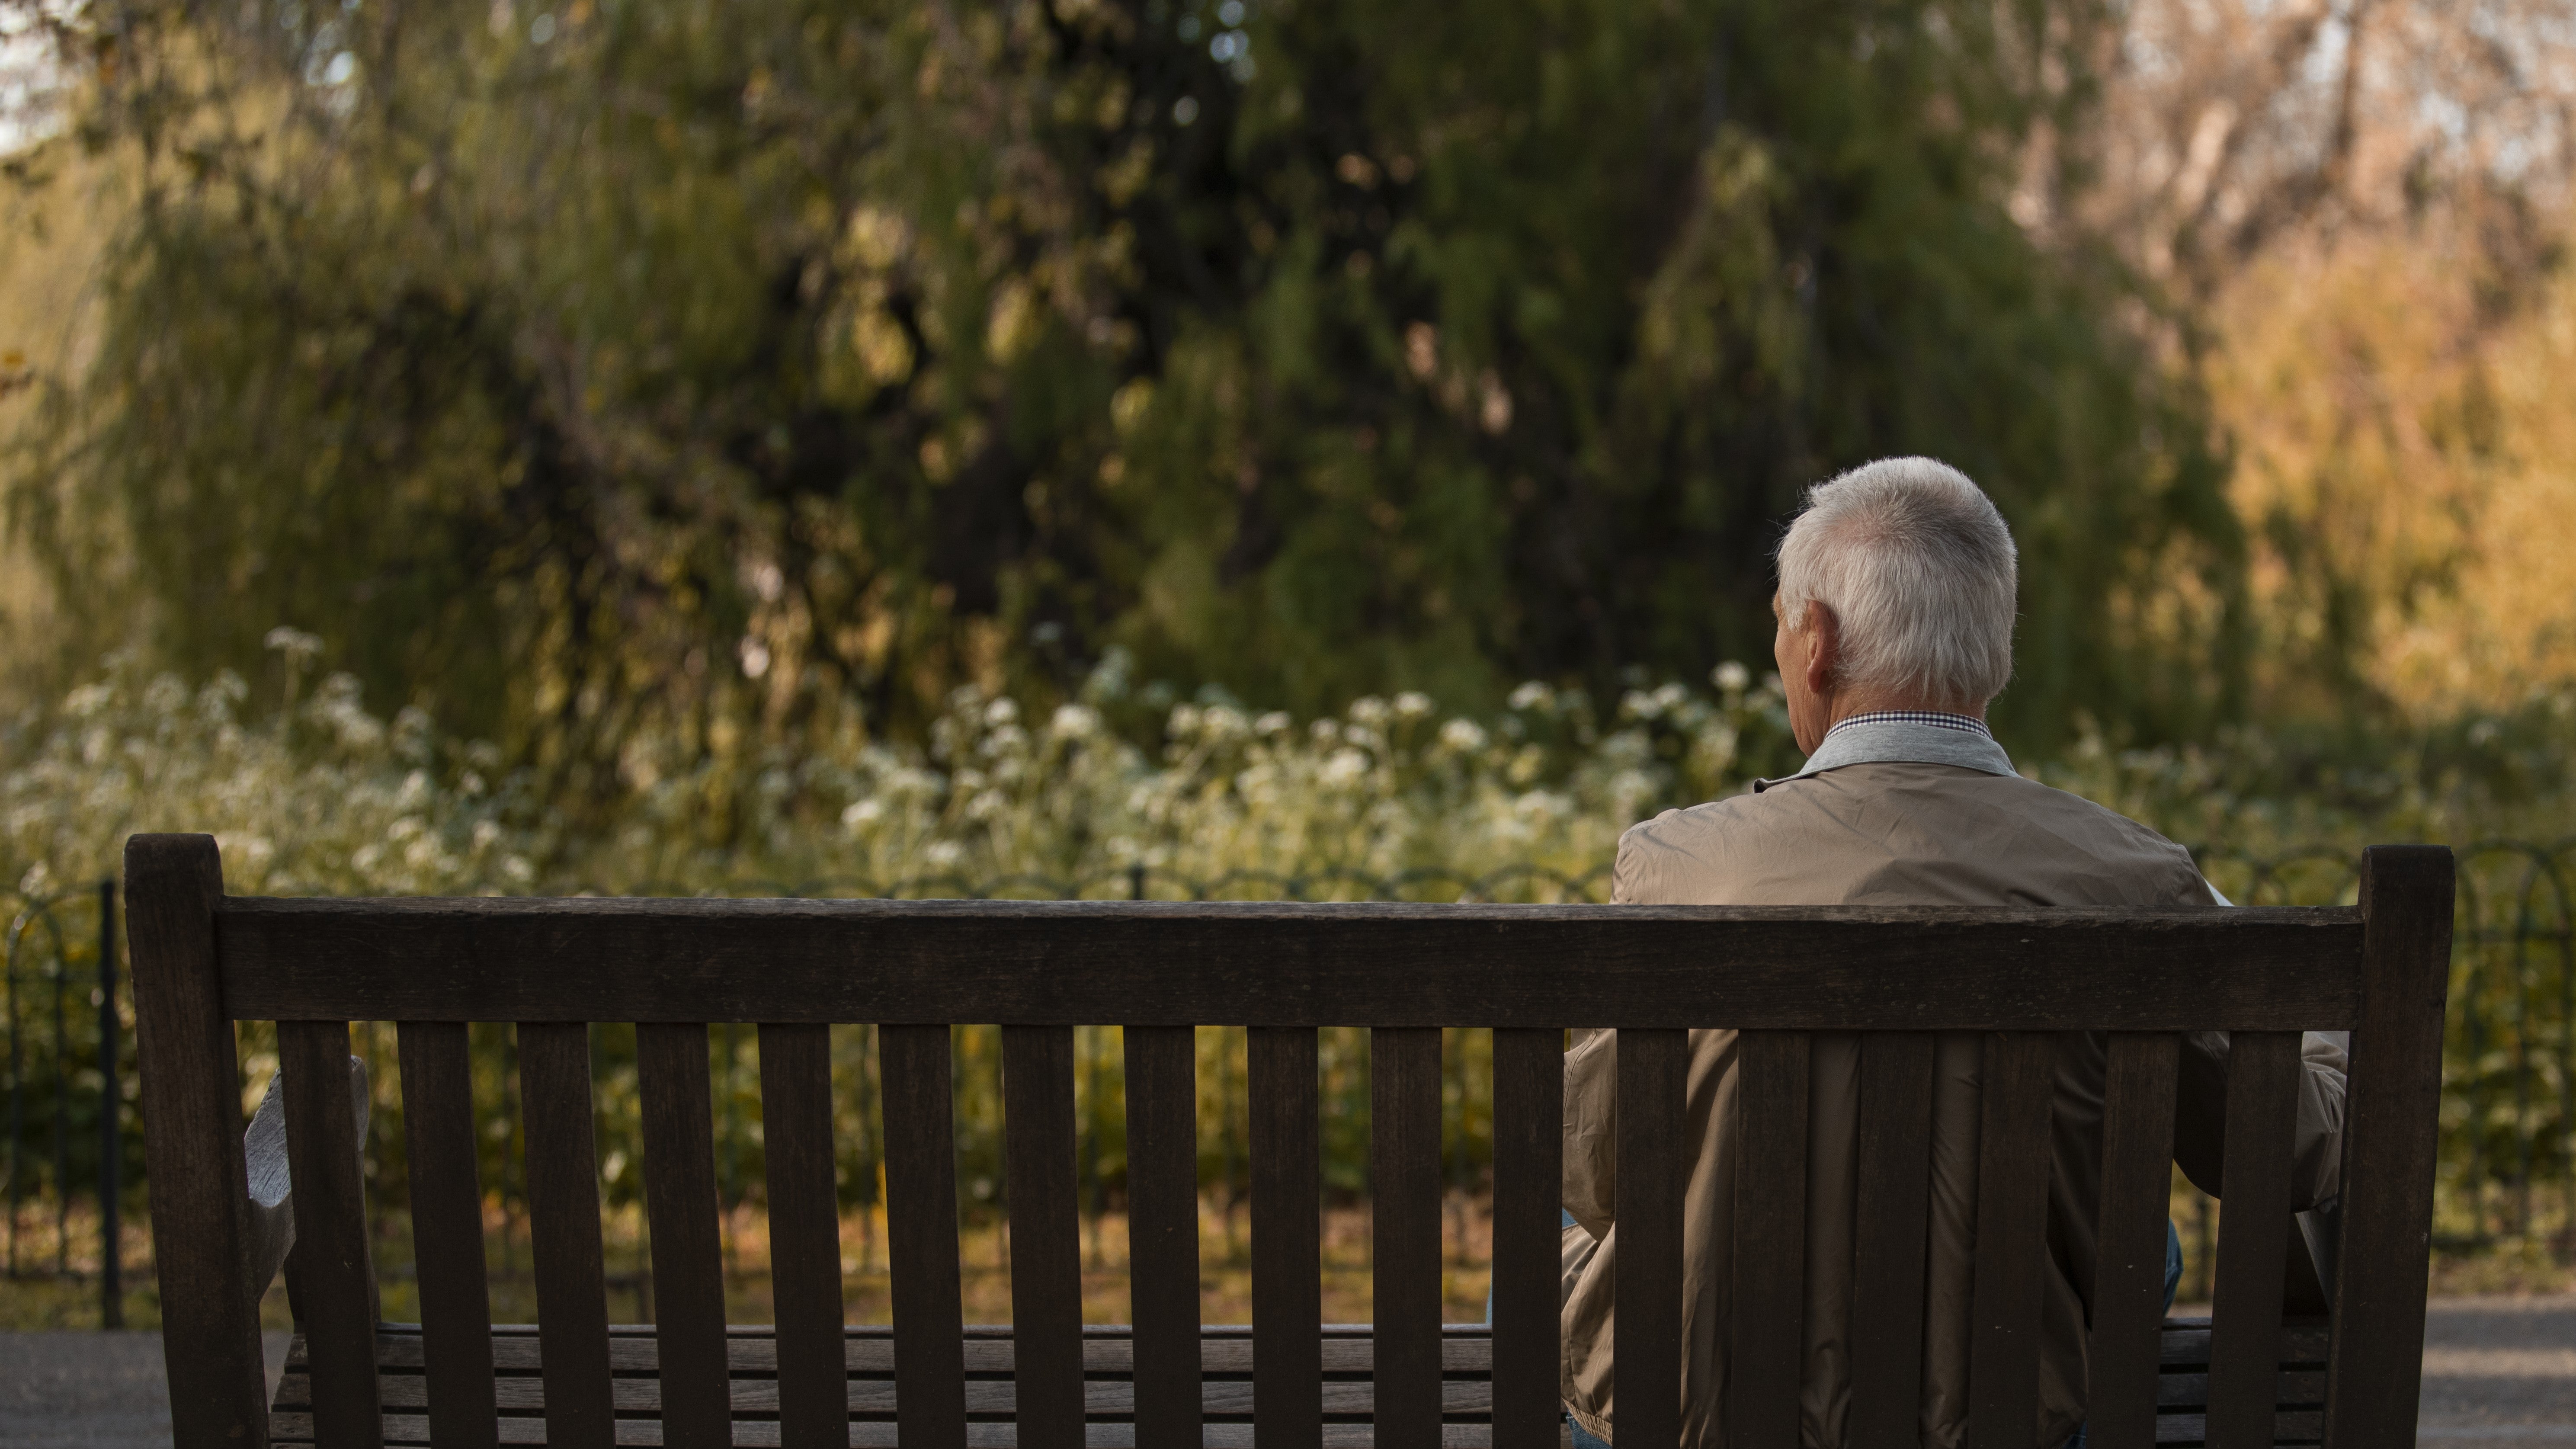 An elderly man sitting on a bench alone